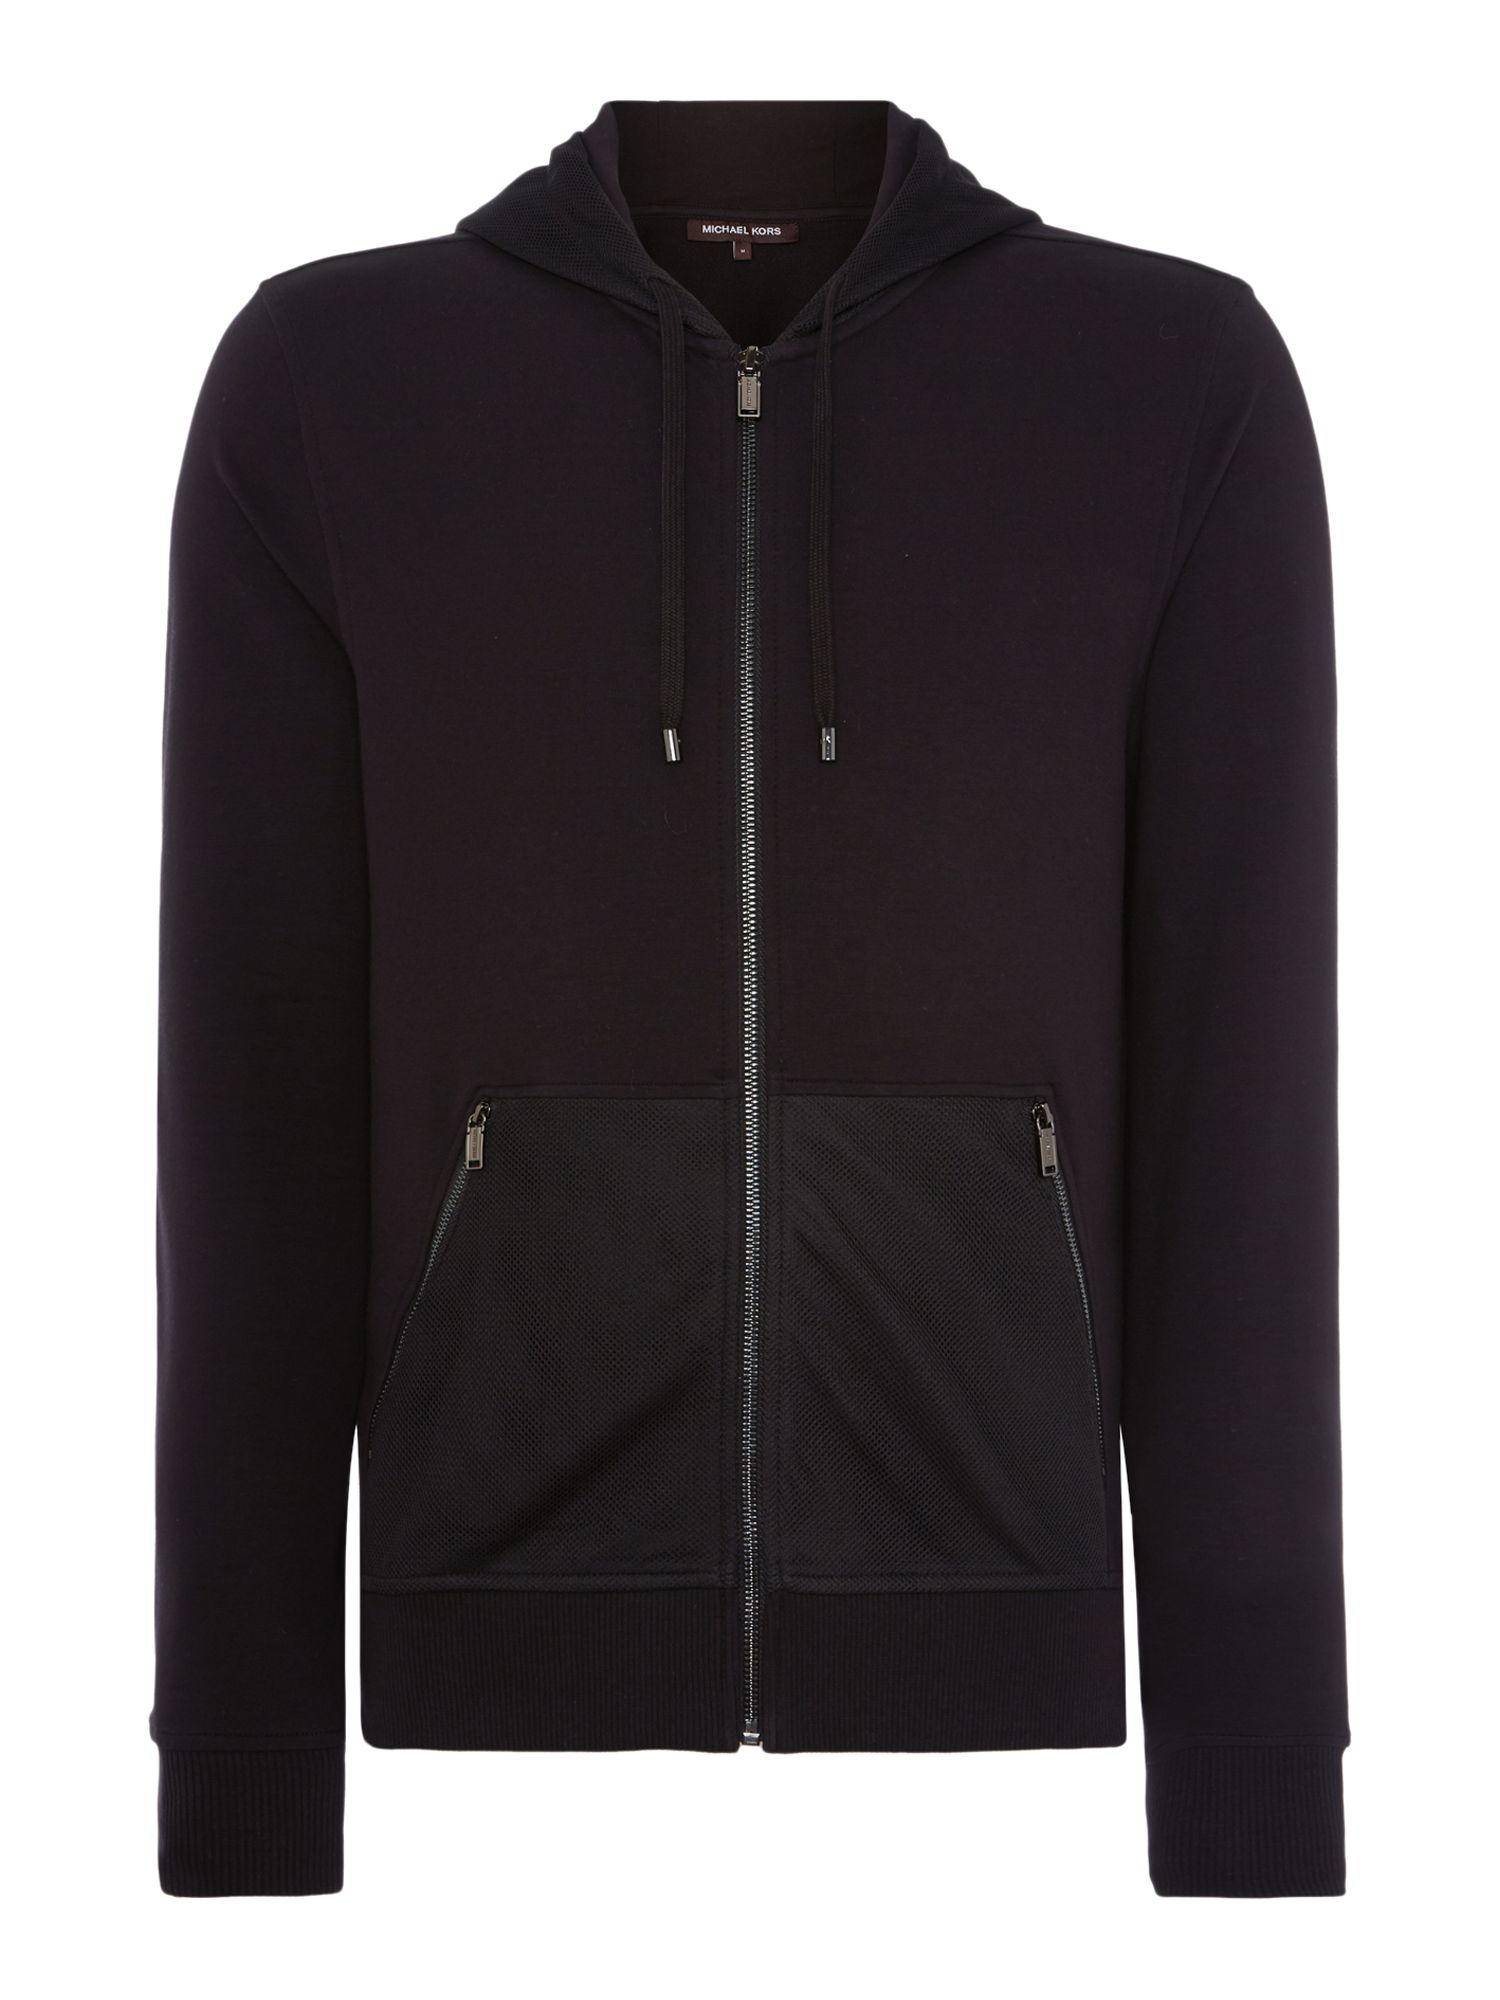 Michael Kors Mesh Pocket Zip Up Hooded Sweatshirt in Black for Men | Lyst